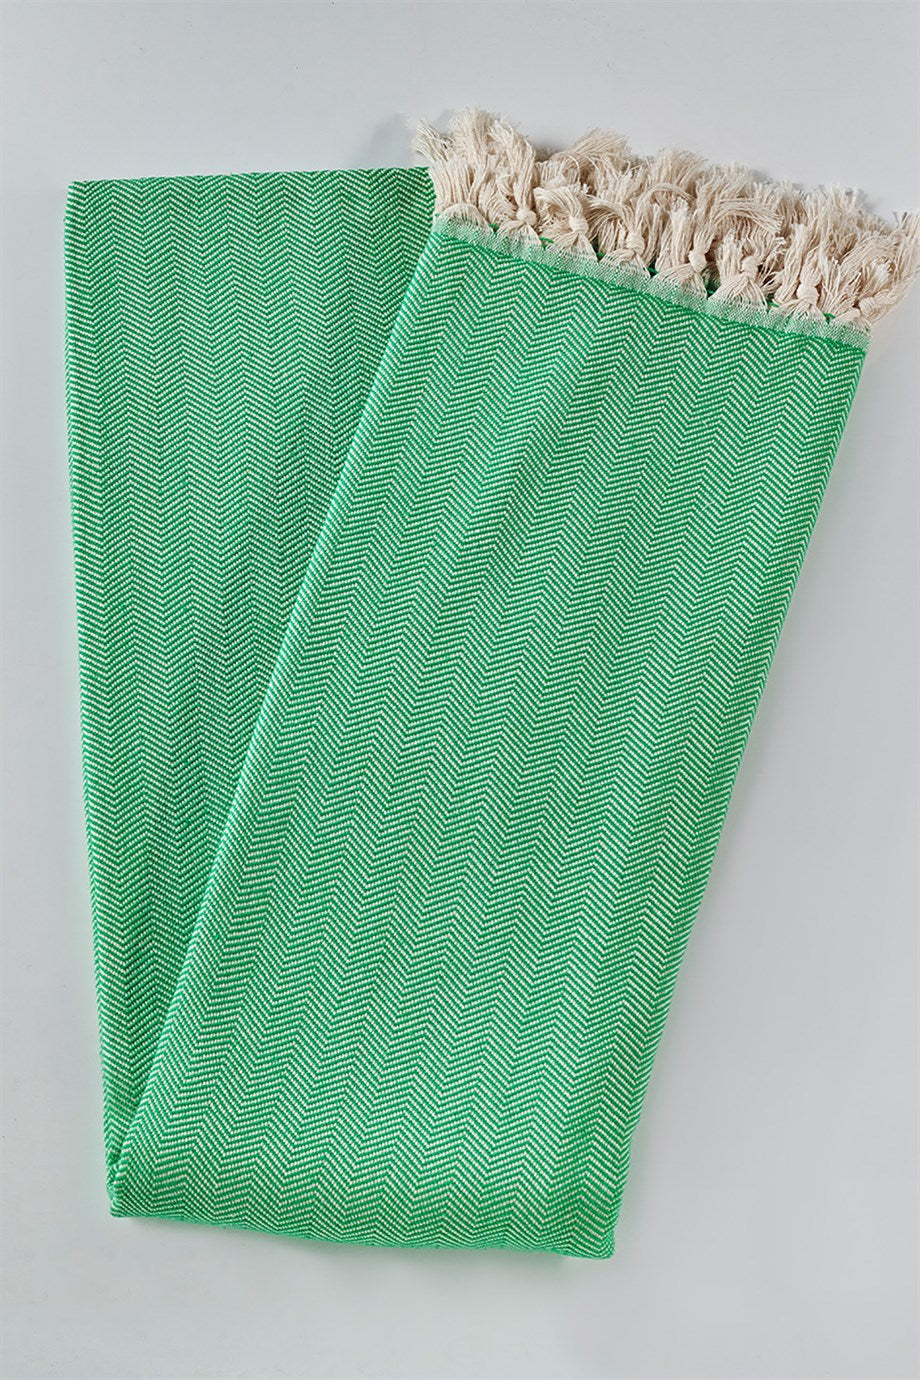 DENIZLI CONCEPT Herringbone Double Green Bedspread